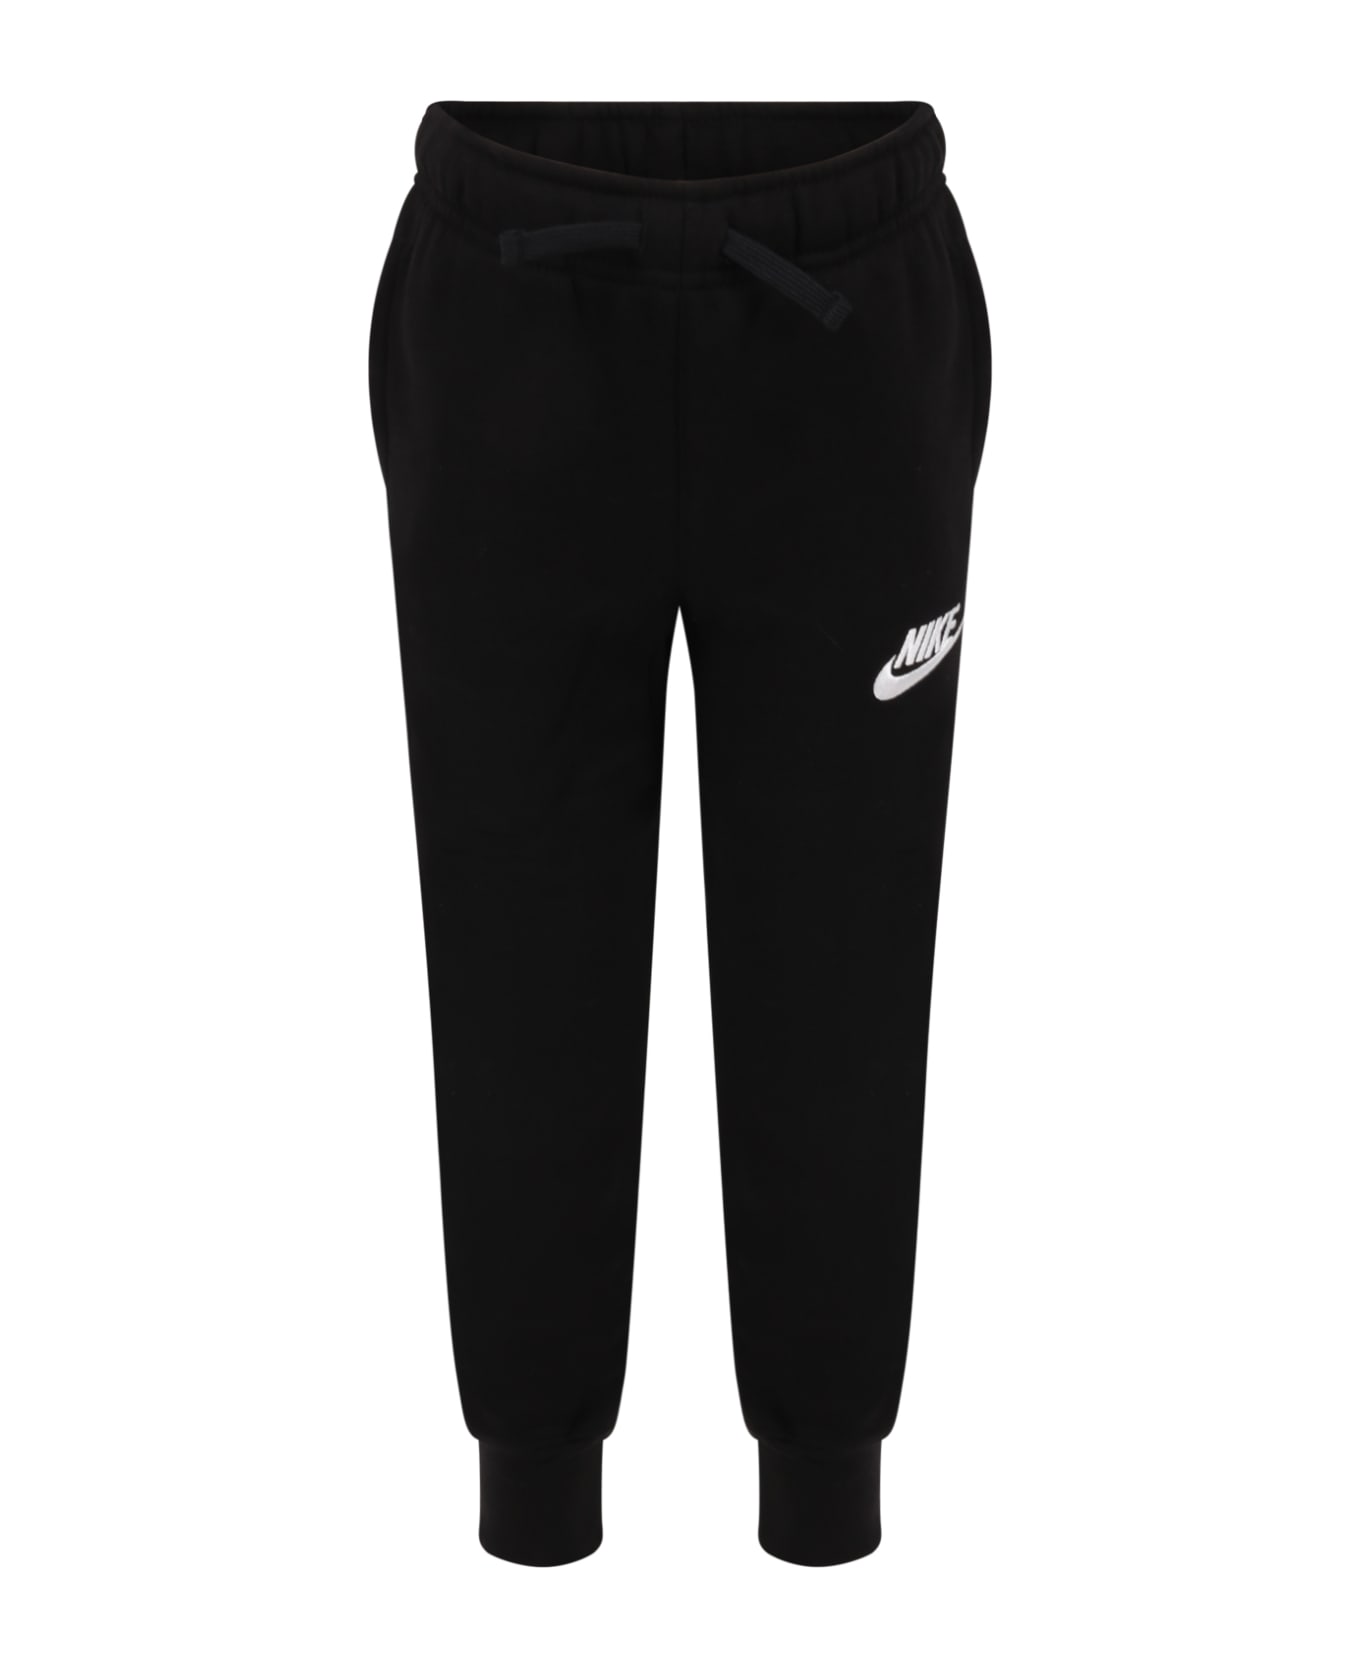 Nike Black Sweatpant For Kids With Logo - Black